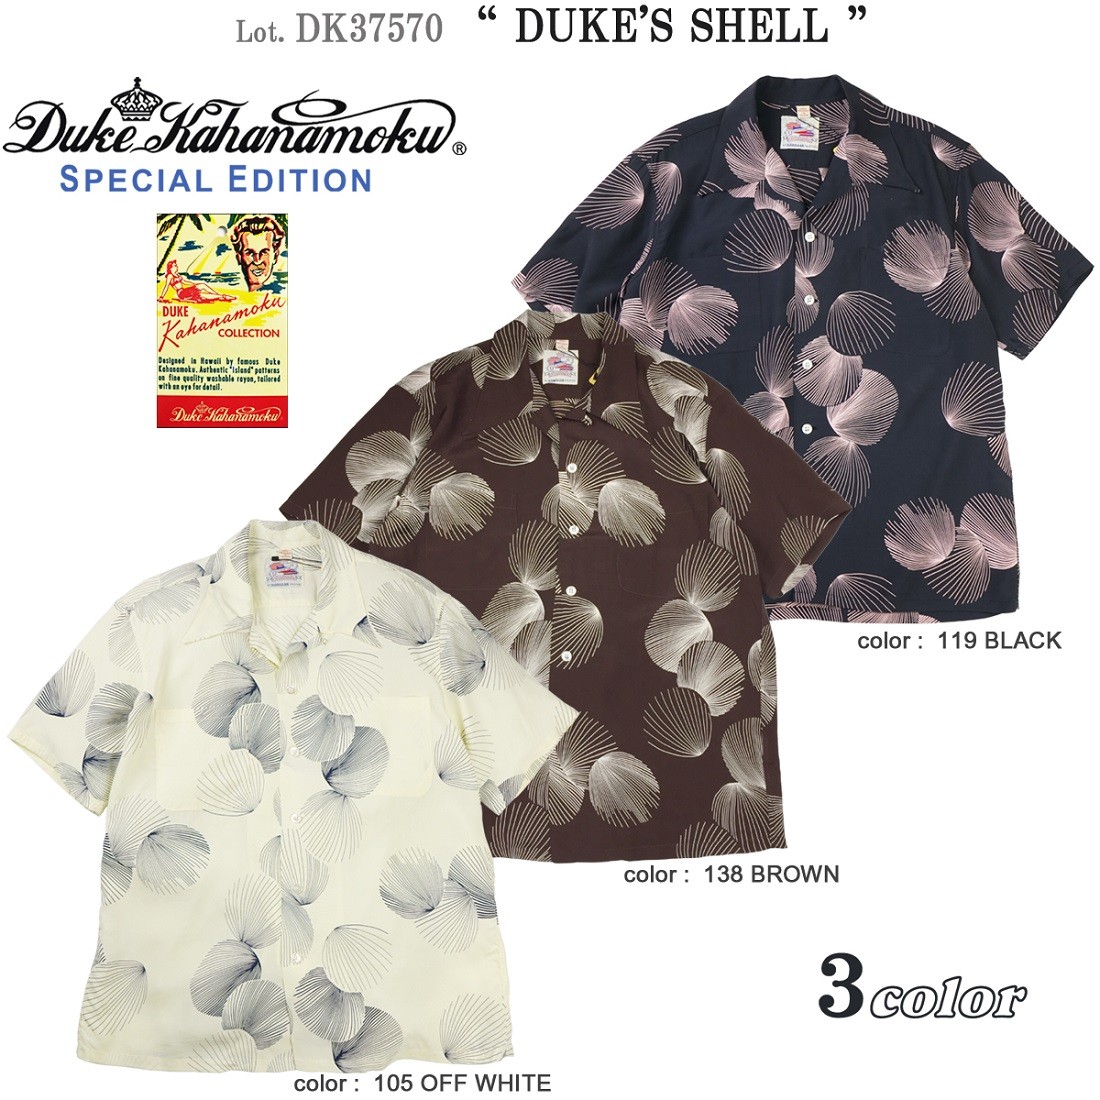 DK37570 デュークカハナモク スペシャルエディション “DUKE'S SHELL” 半袖 アロハシャツ (サンサーフ SUN SURF)  DK37570